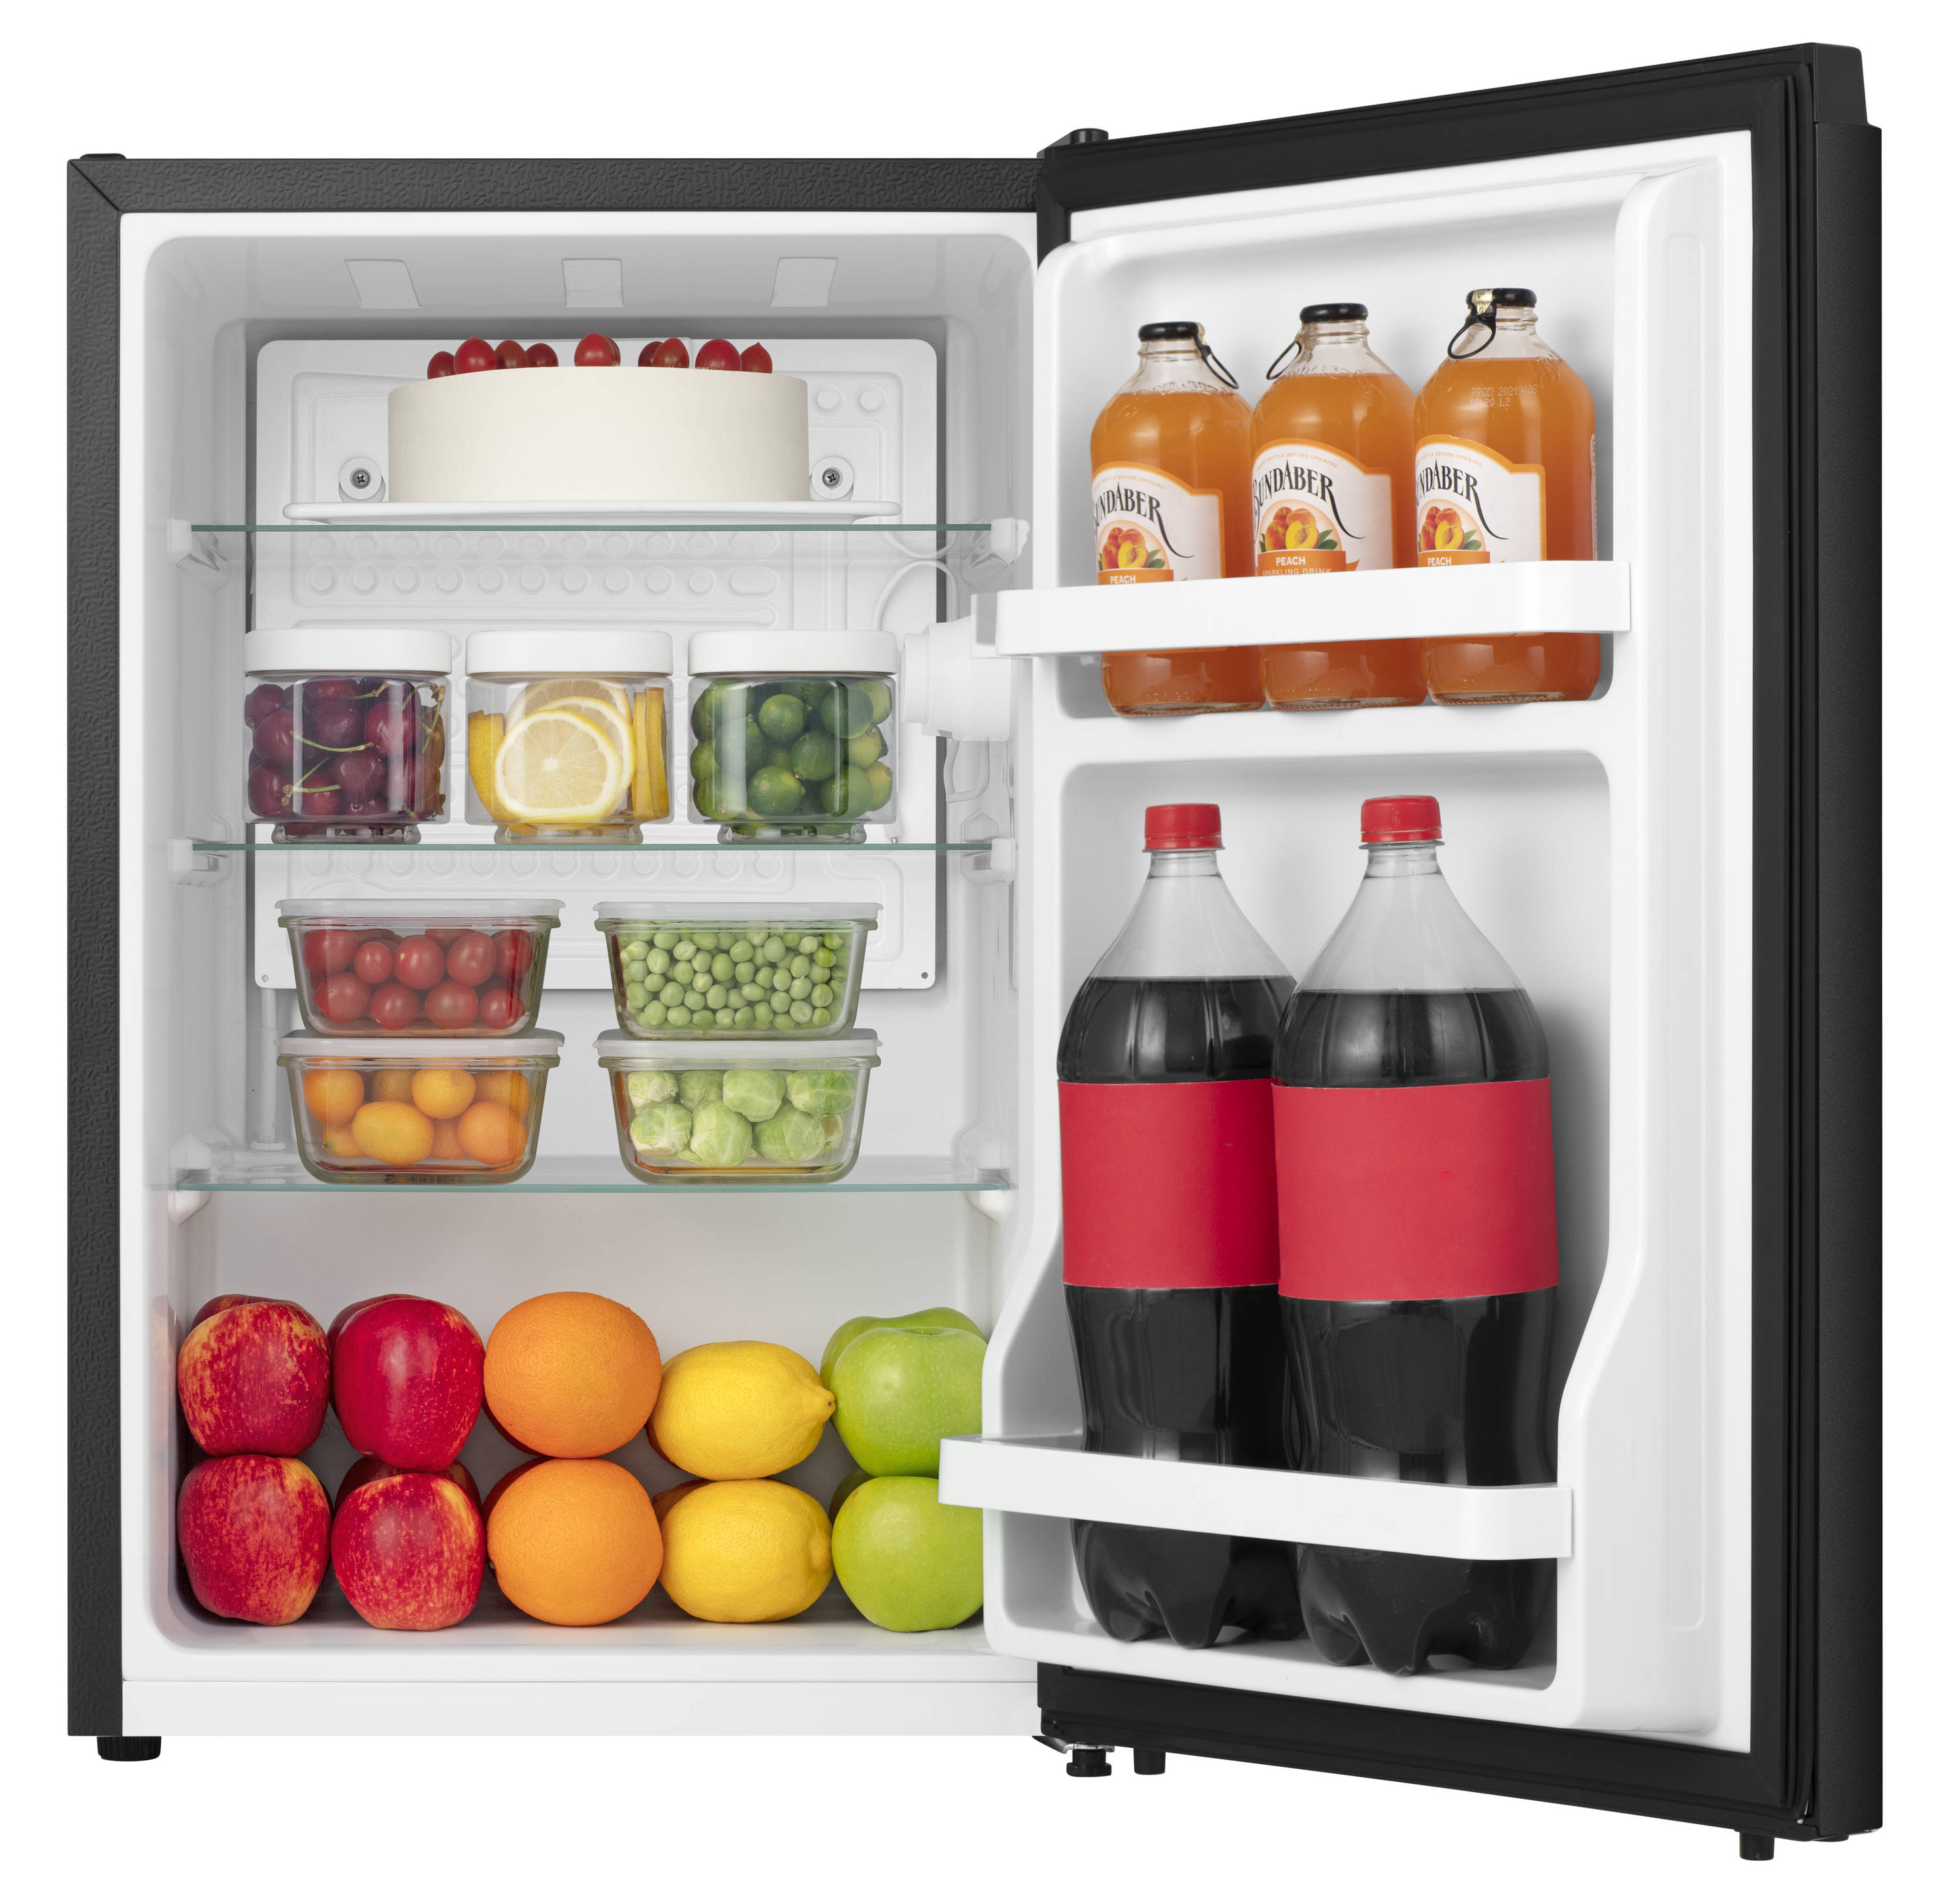 Avanti Retro Compact Refrigerator 2 Door 3 Cu Ft 34 H x 20 12 W x 18 D Red  - Office Depot